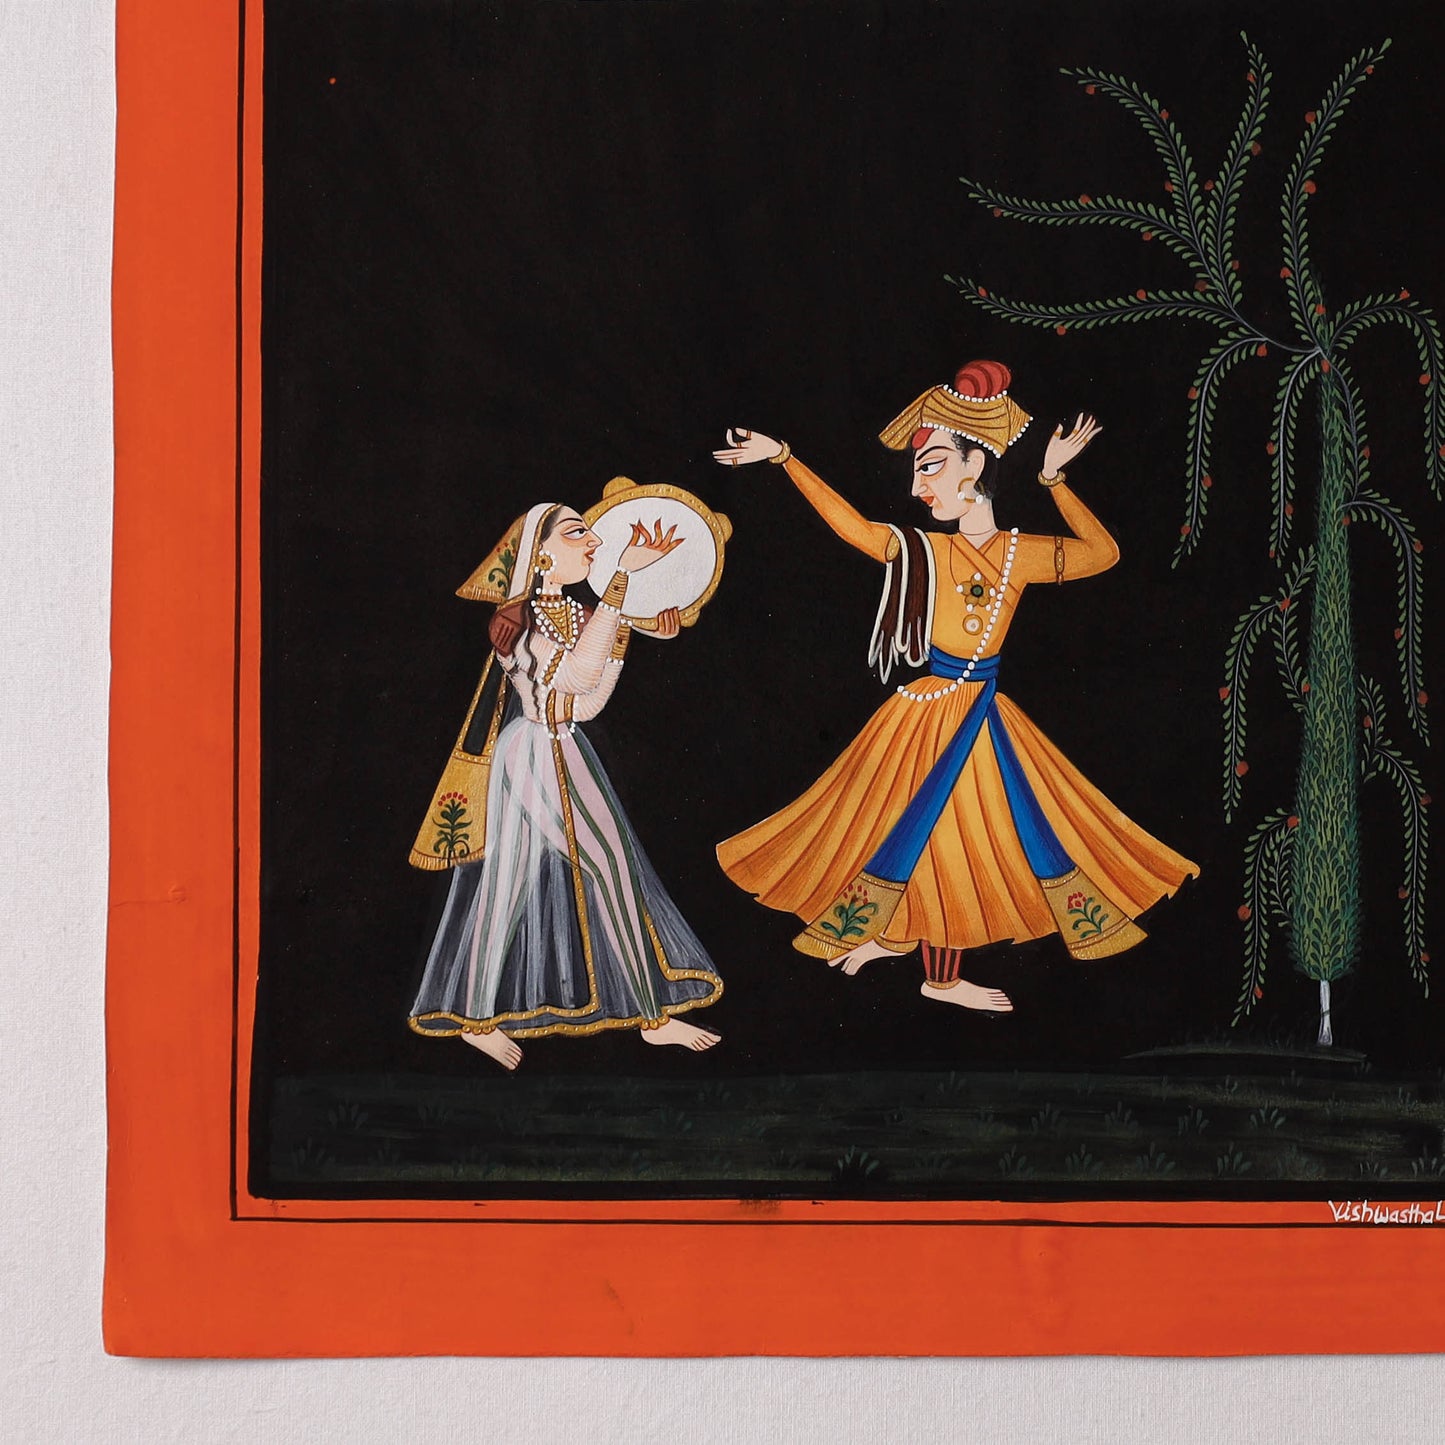 Traditional Basohli Painting by Vishwasthali (11 x 11 in)